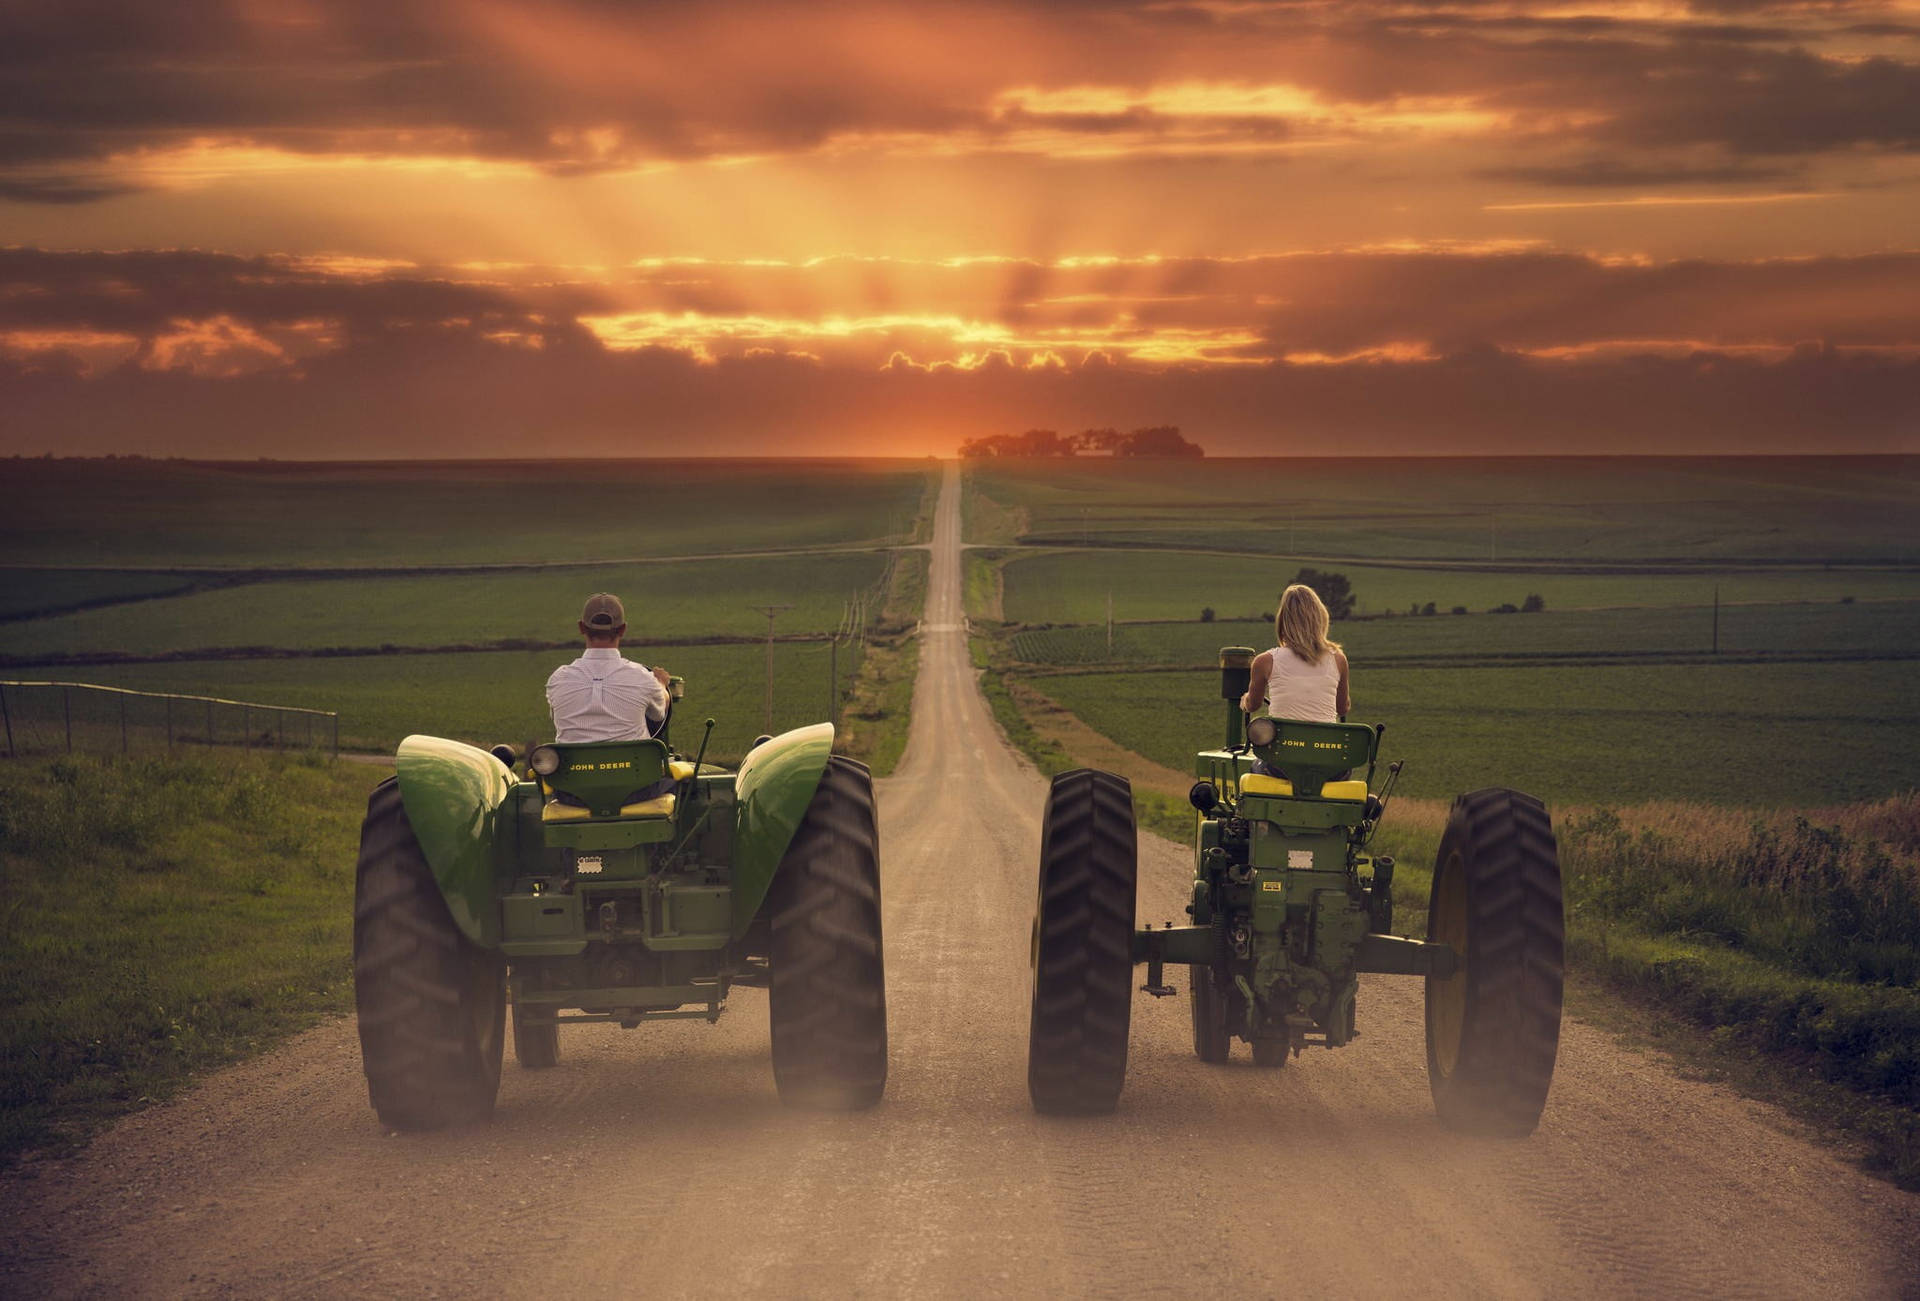 Couple Riding John Deere Tractors